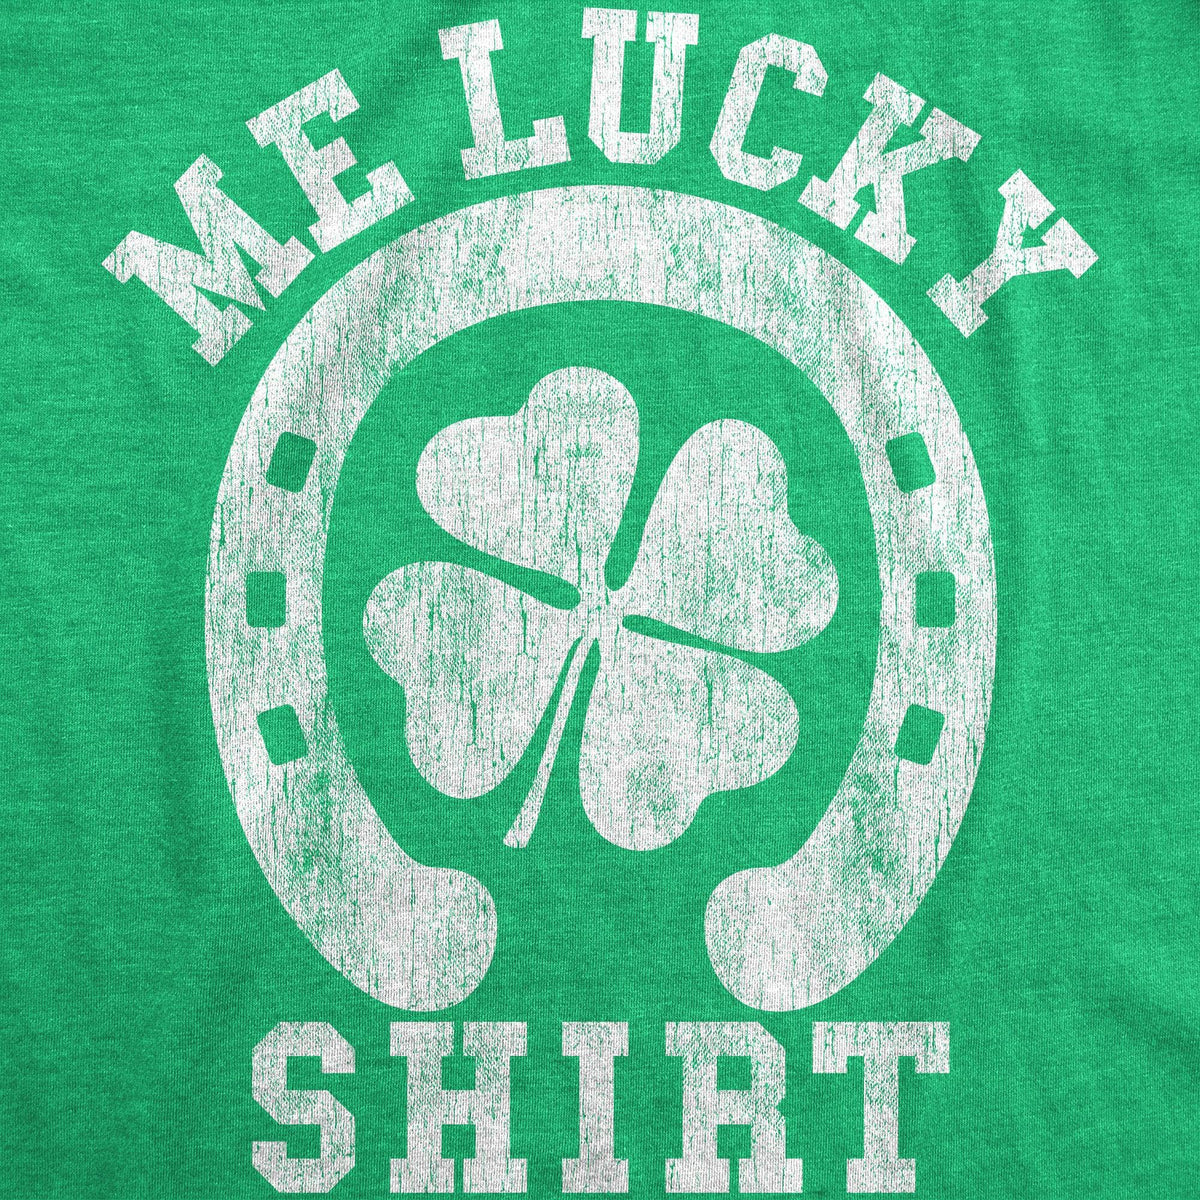 Me Lucky Shirt Women&#39;s Tshirt  -  Crazy Dog T-Shirts